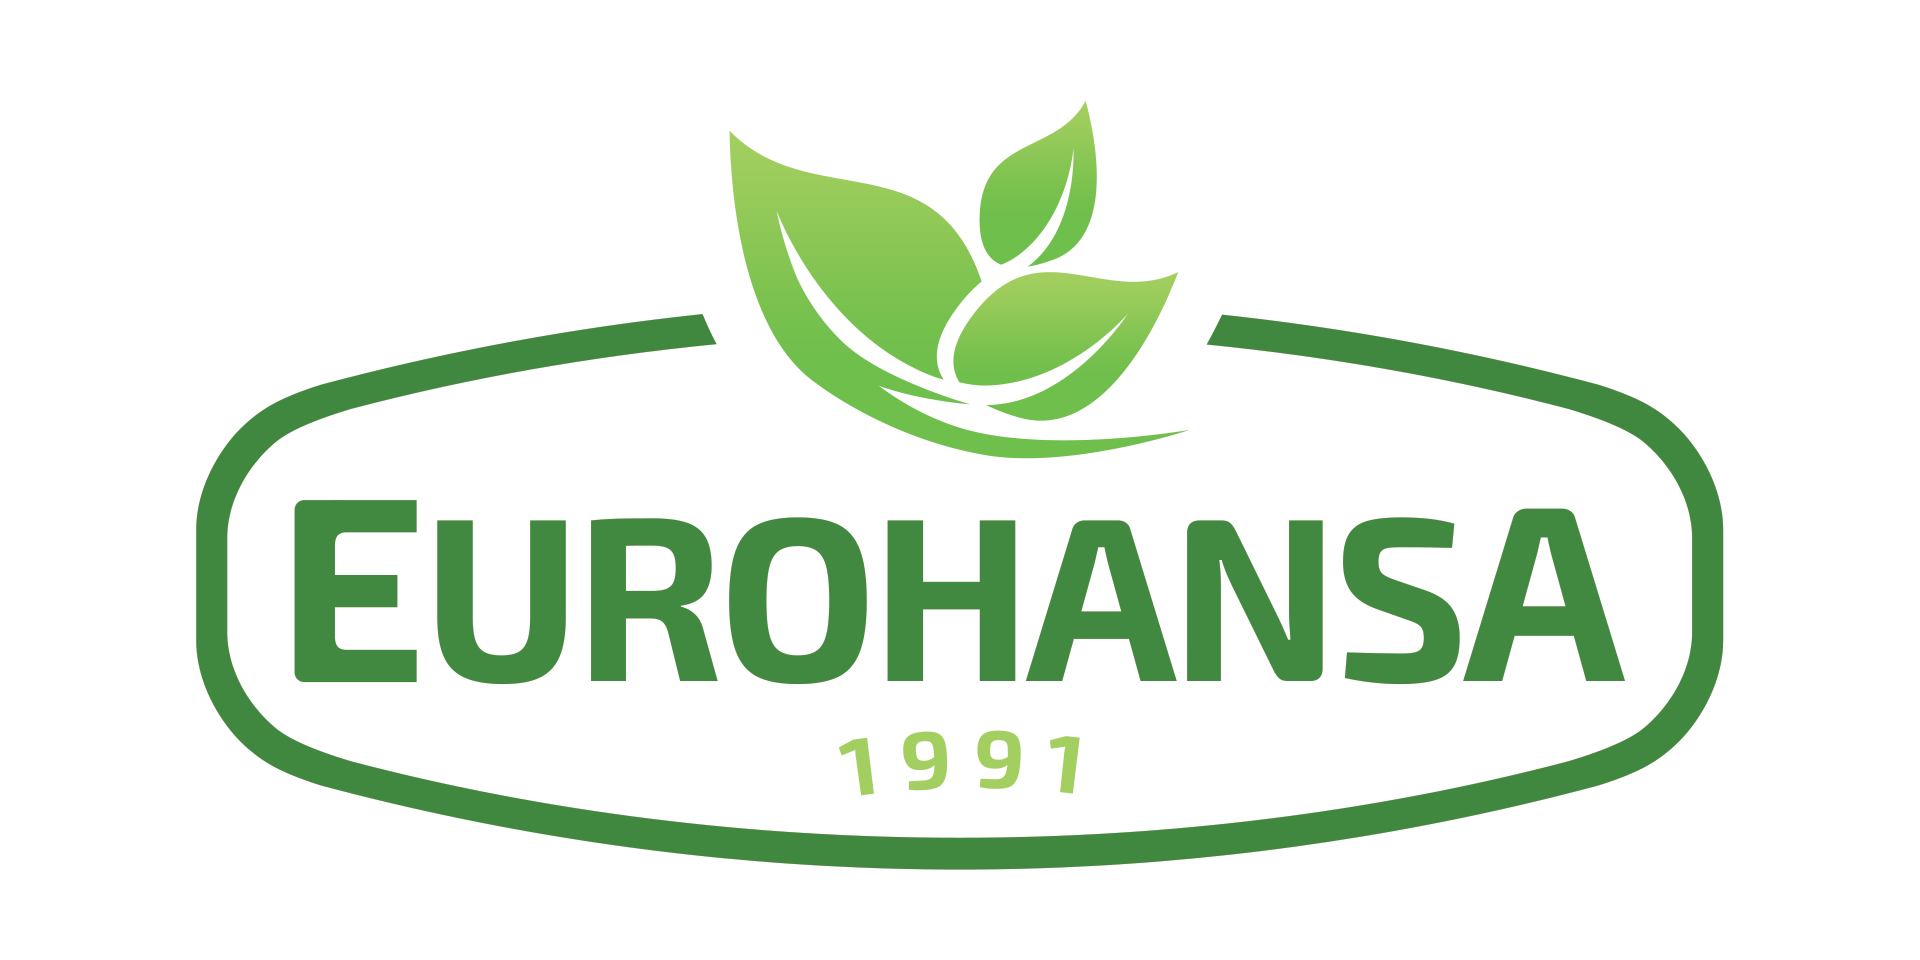 Producer of sweets - EUROHANSA